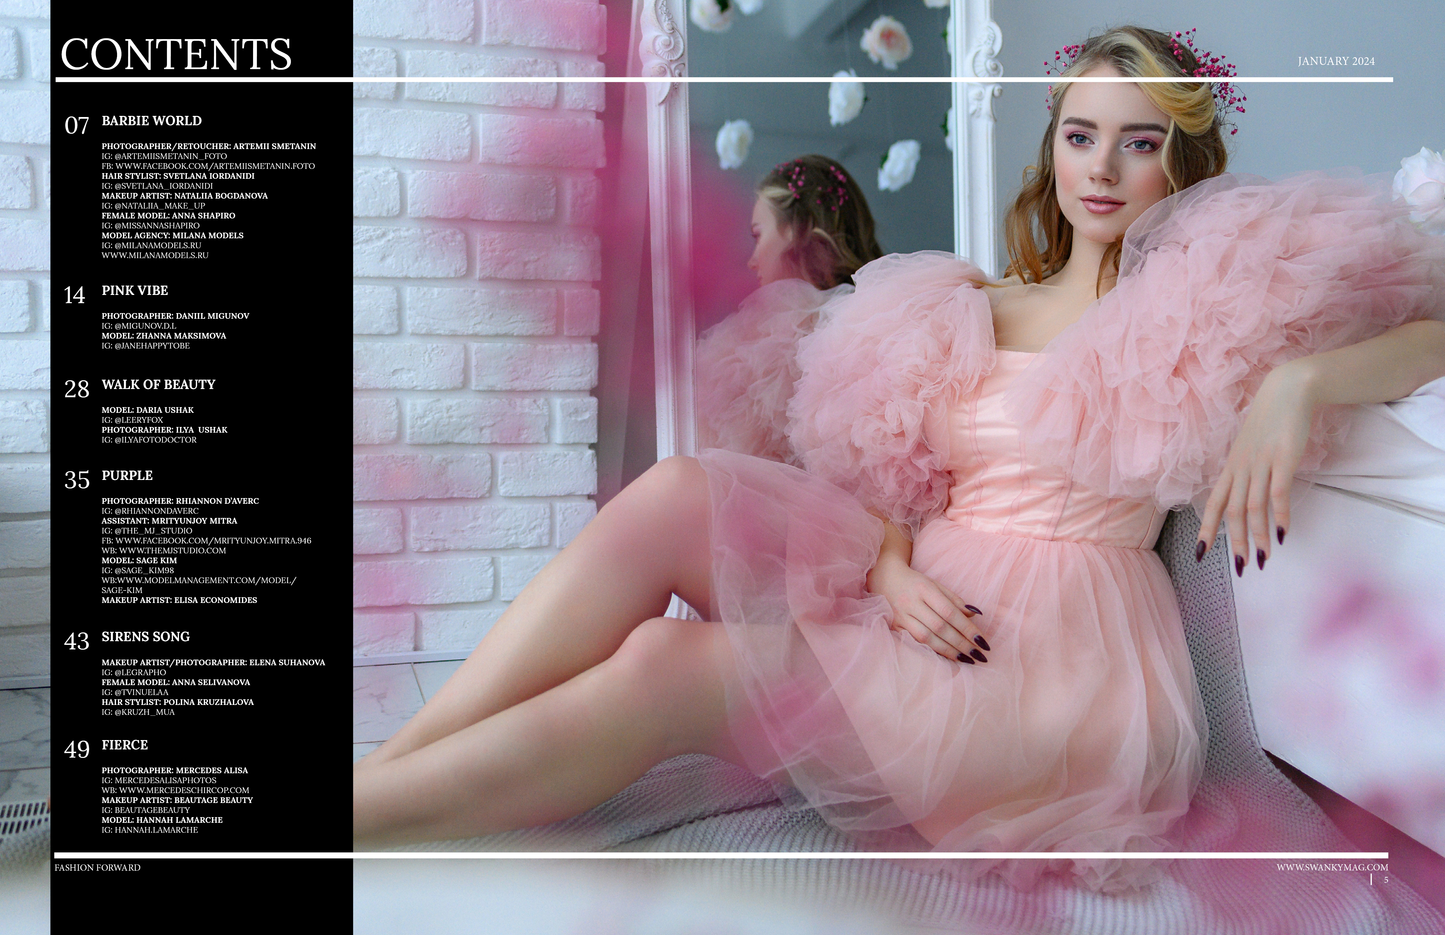 Swanky Fashion Magazine - January 2024: The Beauty Edition Issue 1